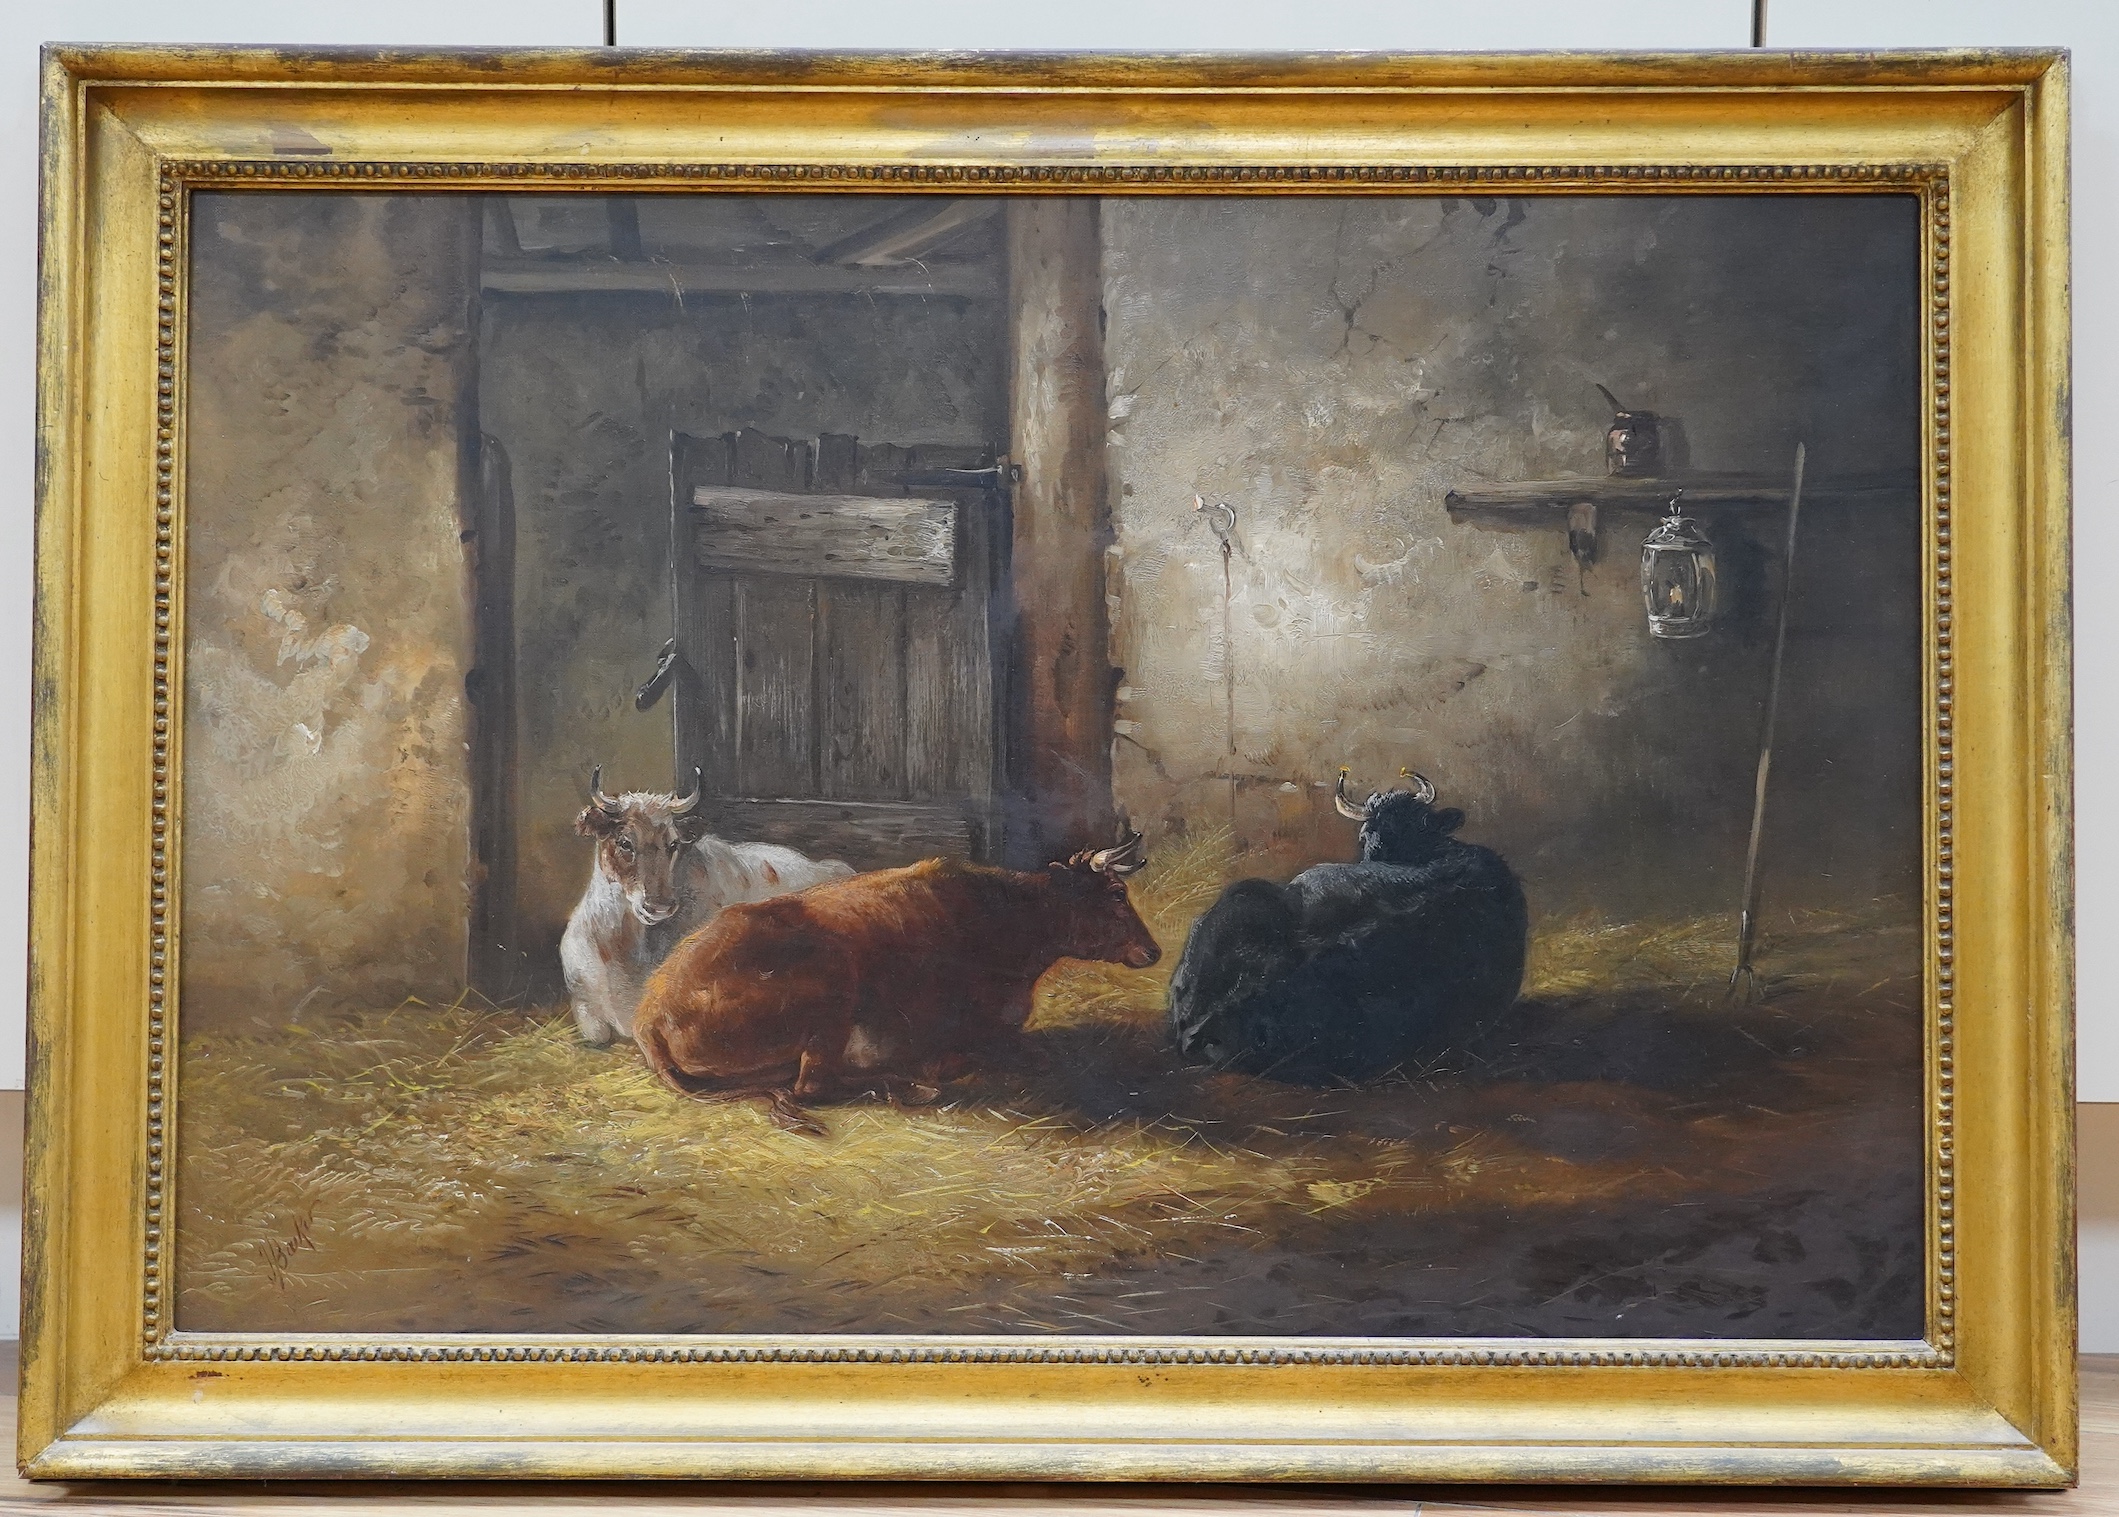 John Baxter (1811-1886), oil on canvas, Resting cattle in a barn, signed, 49 x 74cm, gilt framed